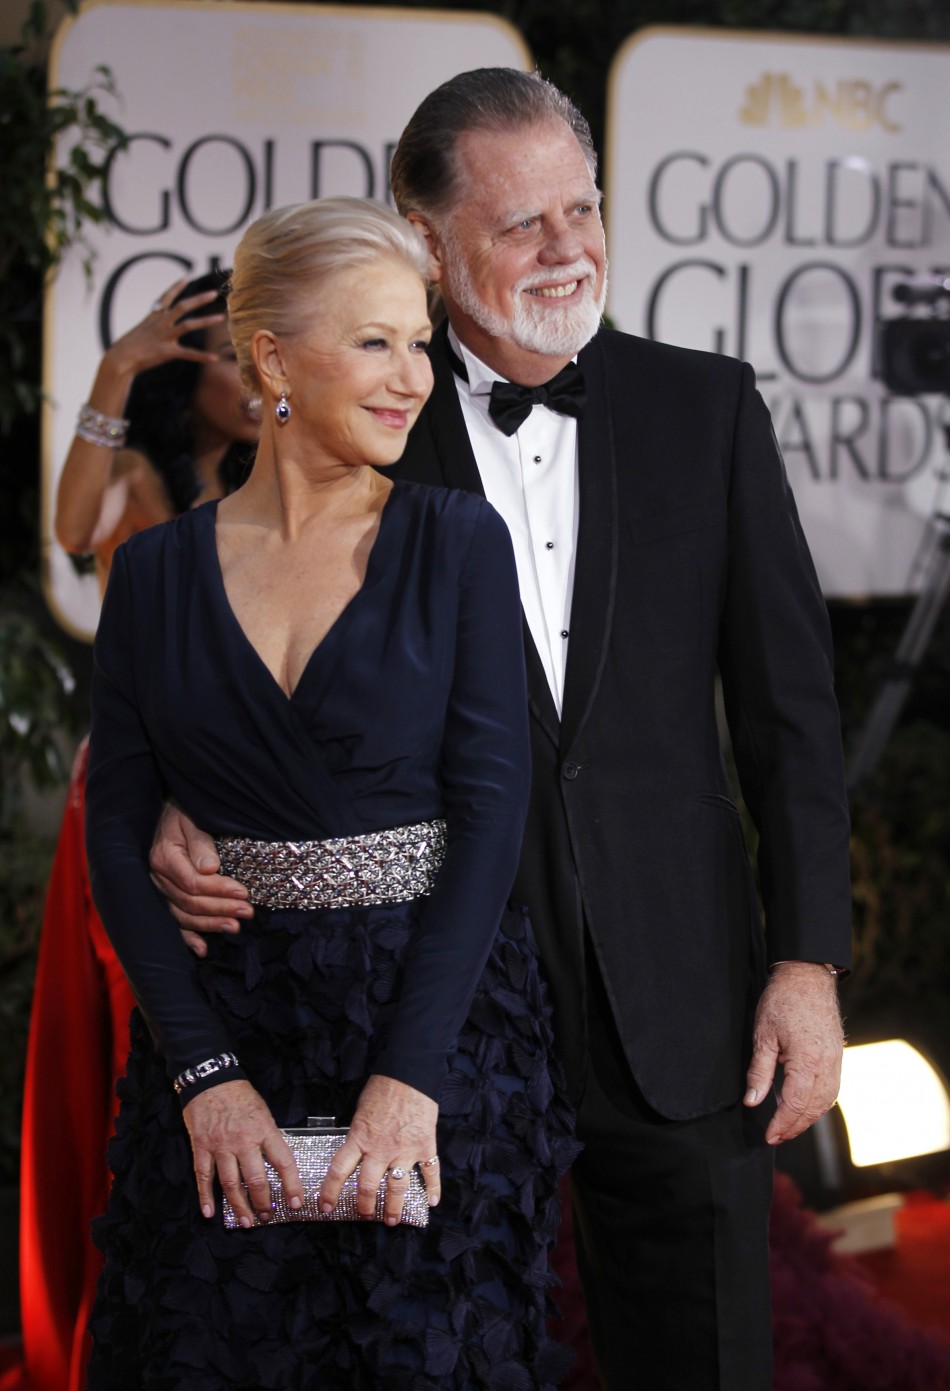 Best Dressed Couple at Golden Globe Awards